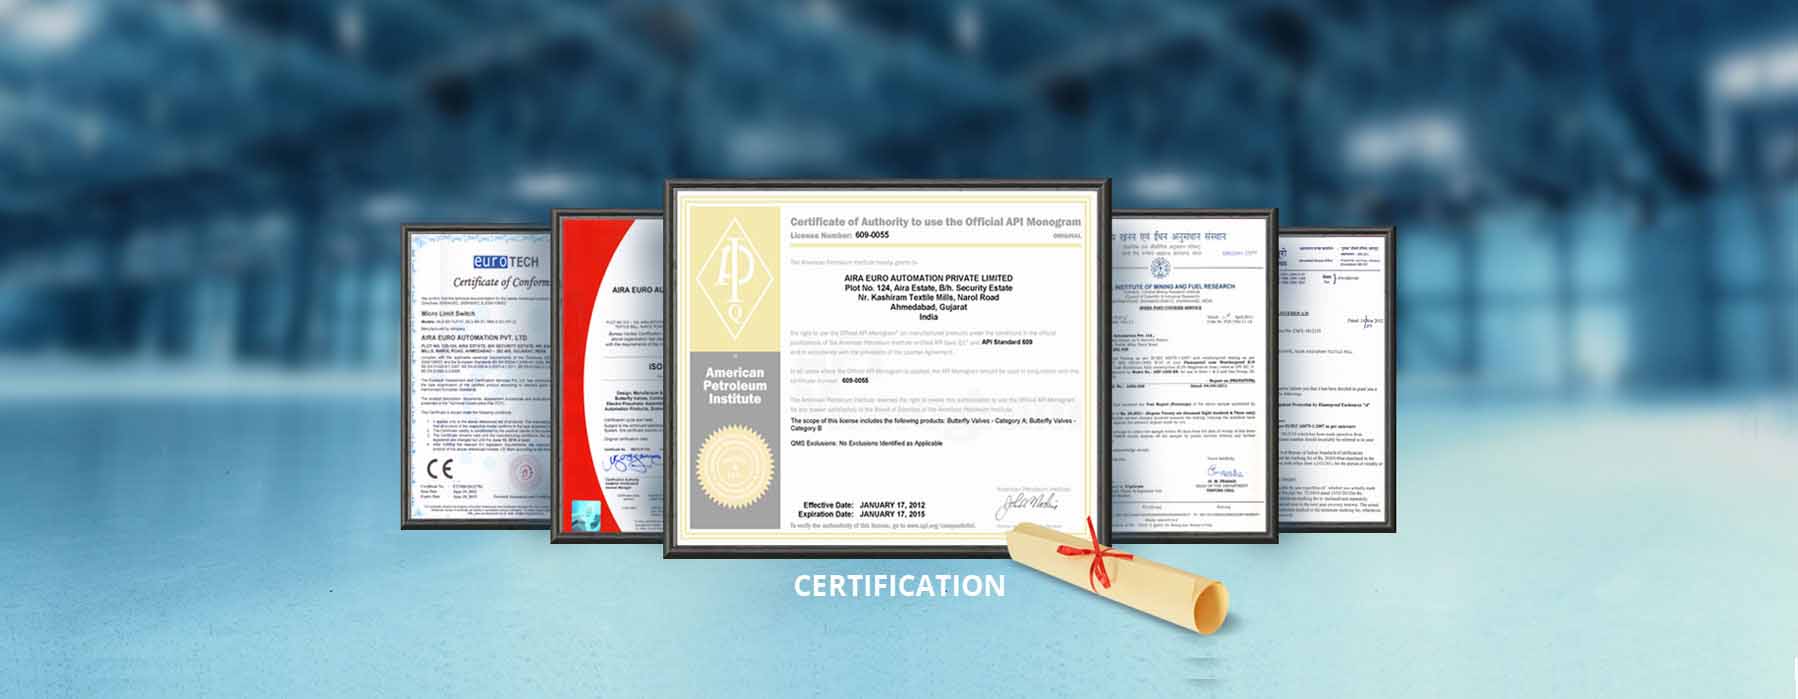 Aira's Certification